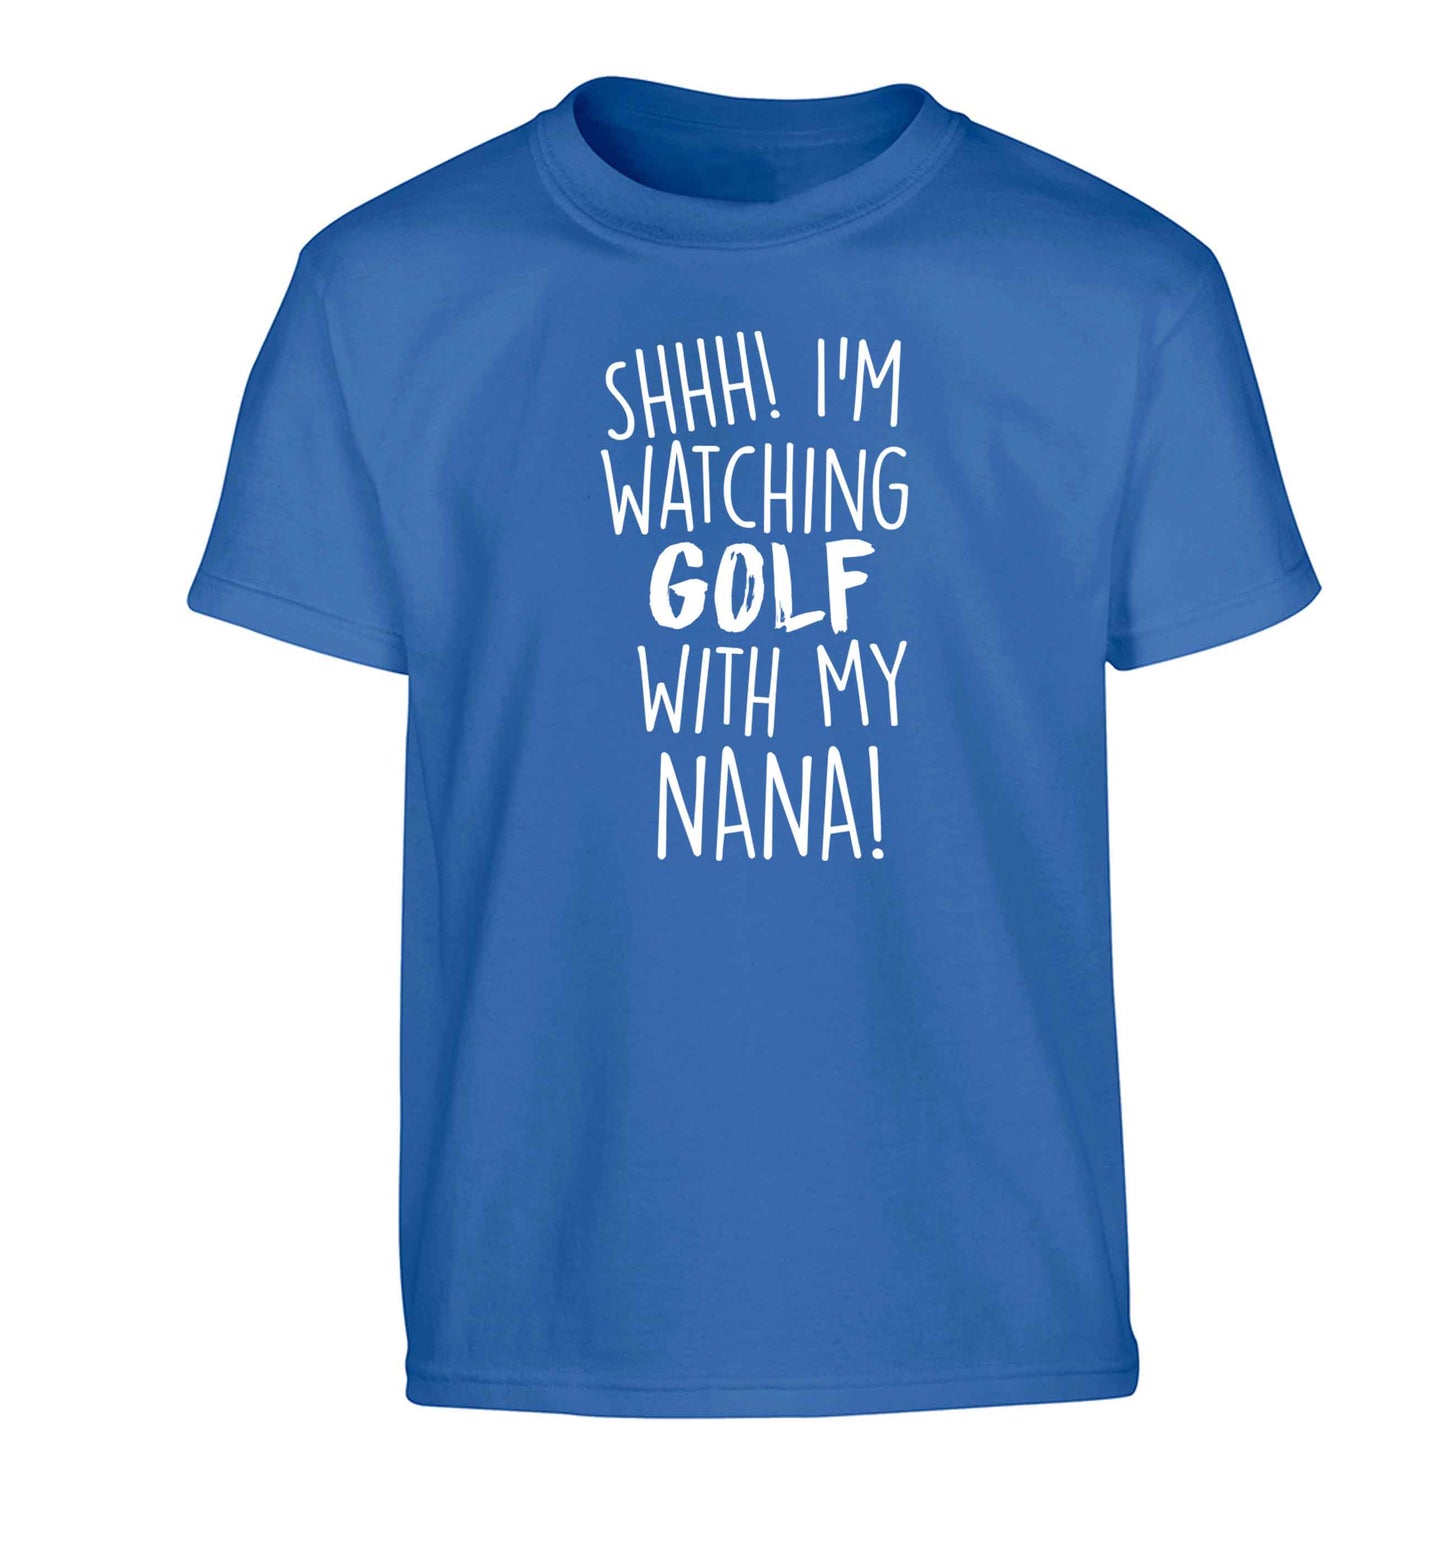 Shh I'm watching golf with my nana Children's blue Tshirt 12-13 Years